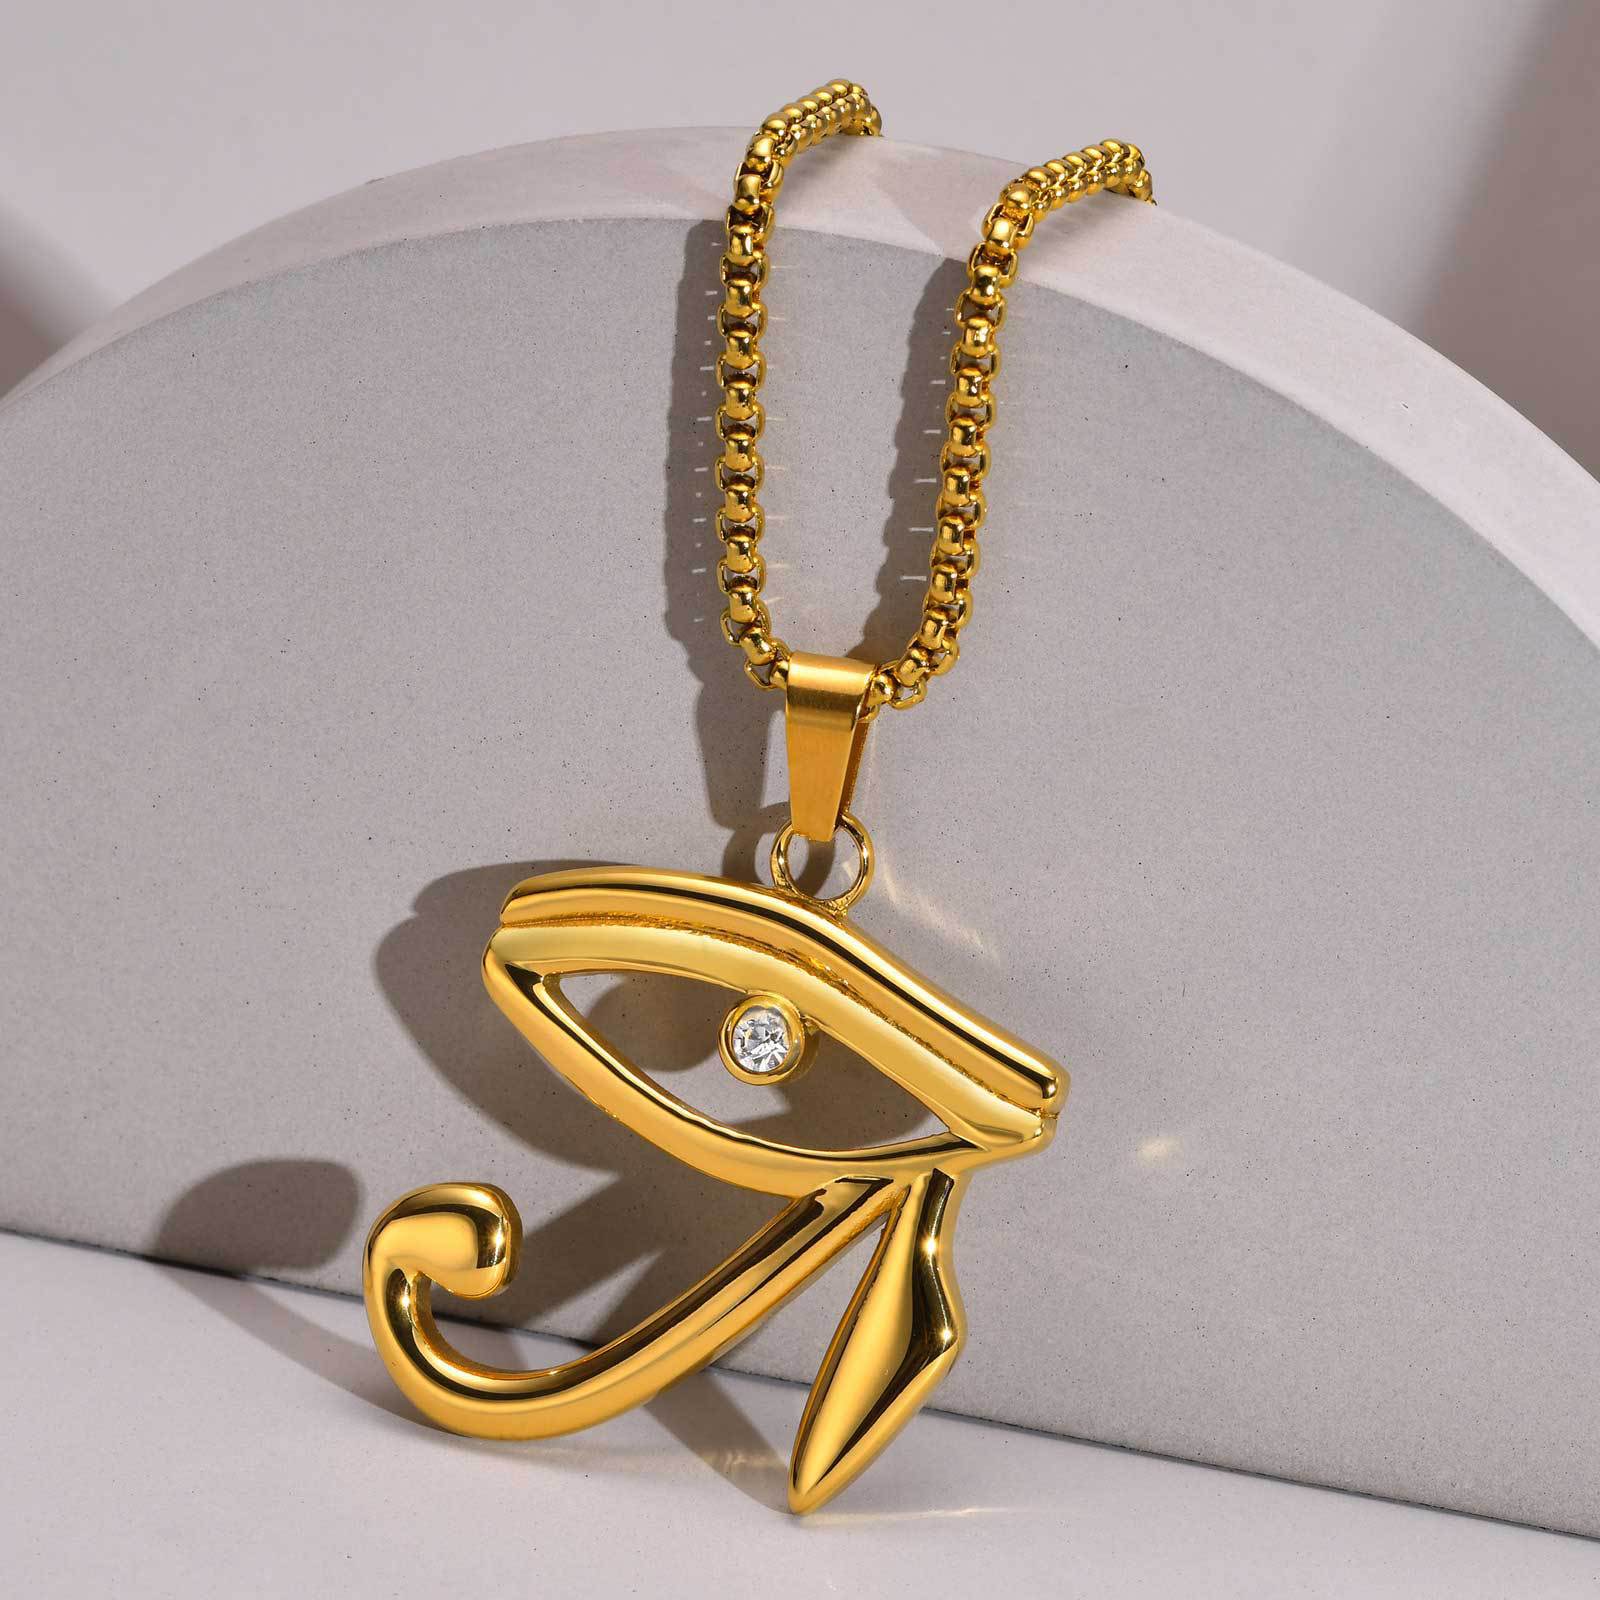 2:Gold Pendant, no matching chain